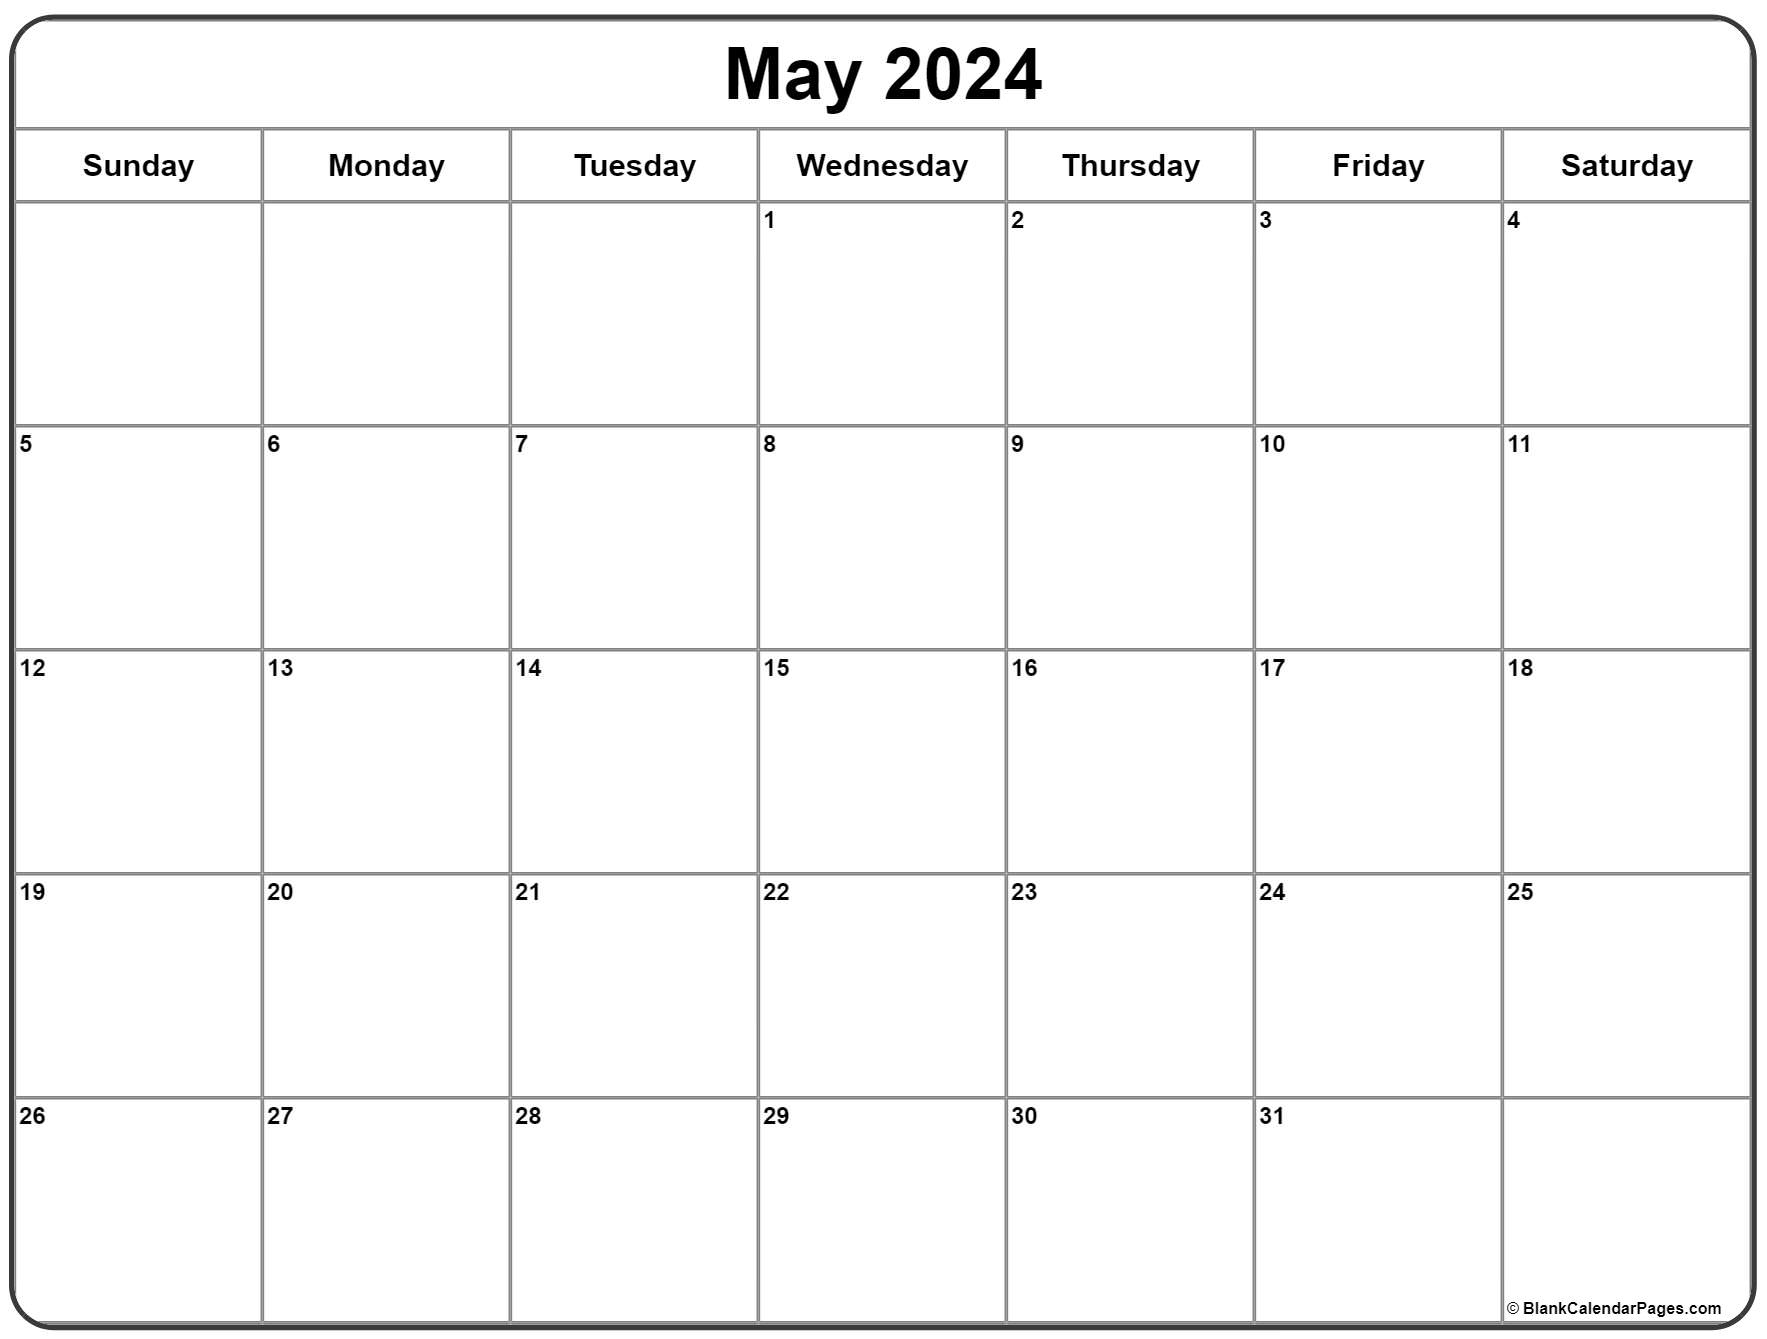 May 2024 Calendar | Free Printable Calendar regarding Free Printable Blank May Calendar 2024